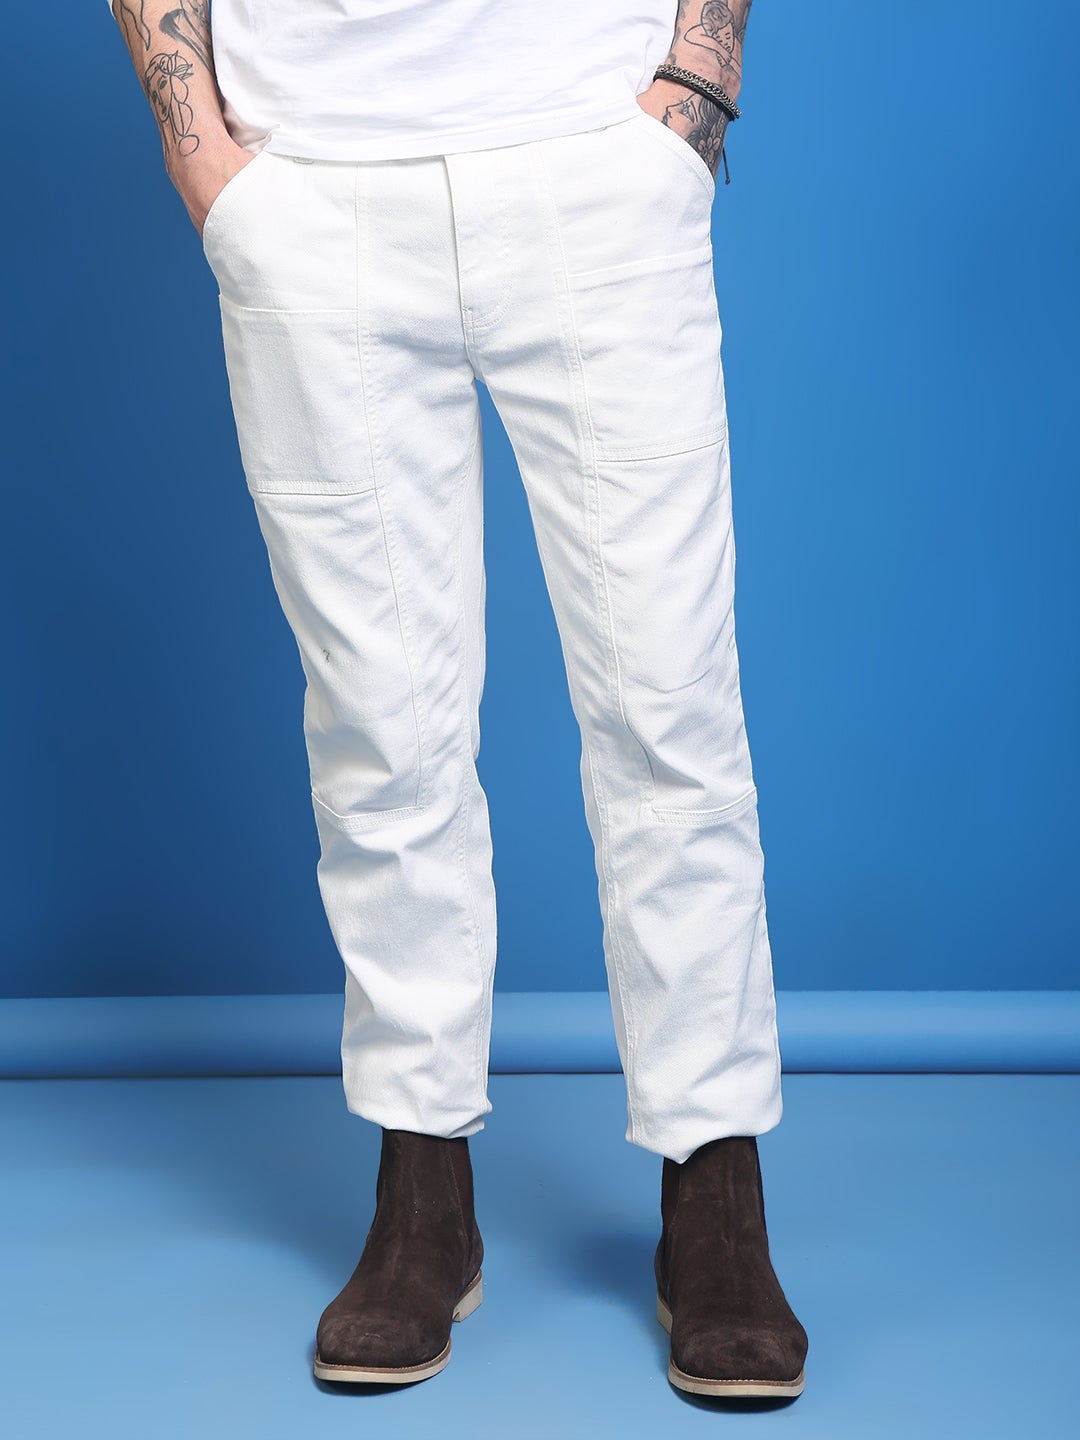 Blue Saint | Casual Wear Solid Bright White Plain Bottom